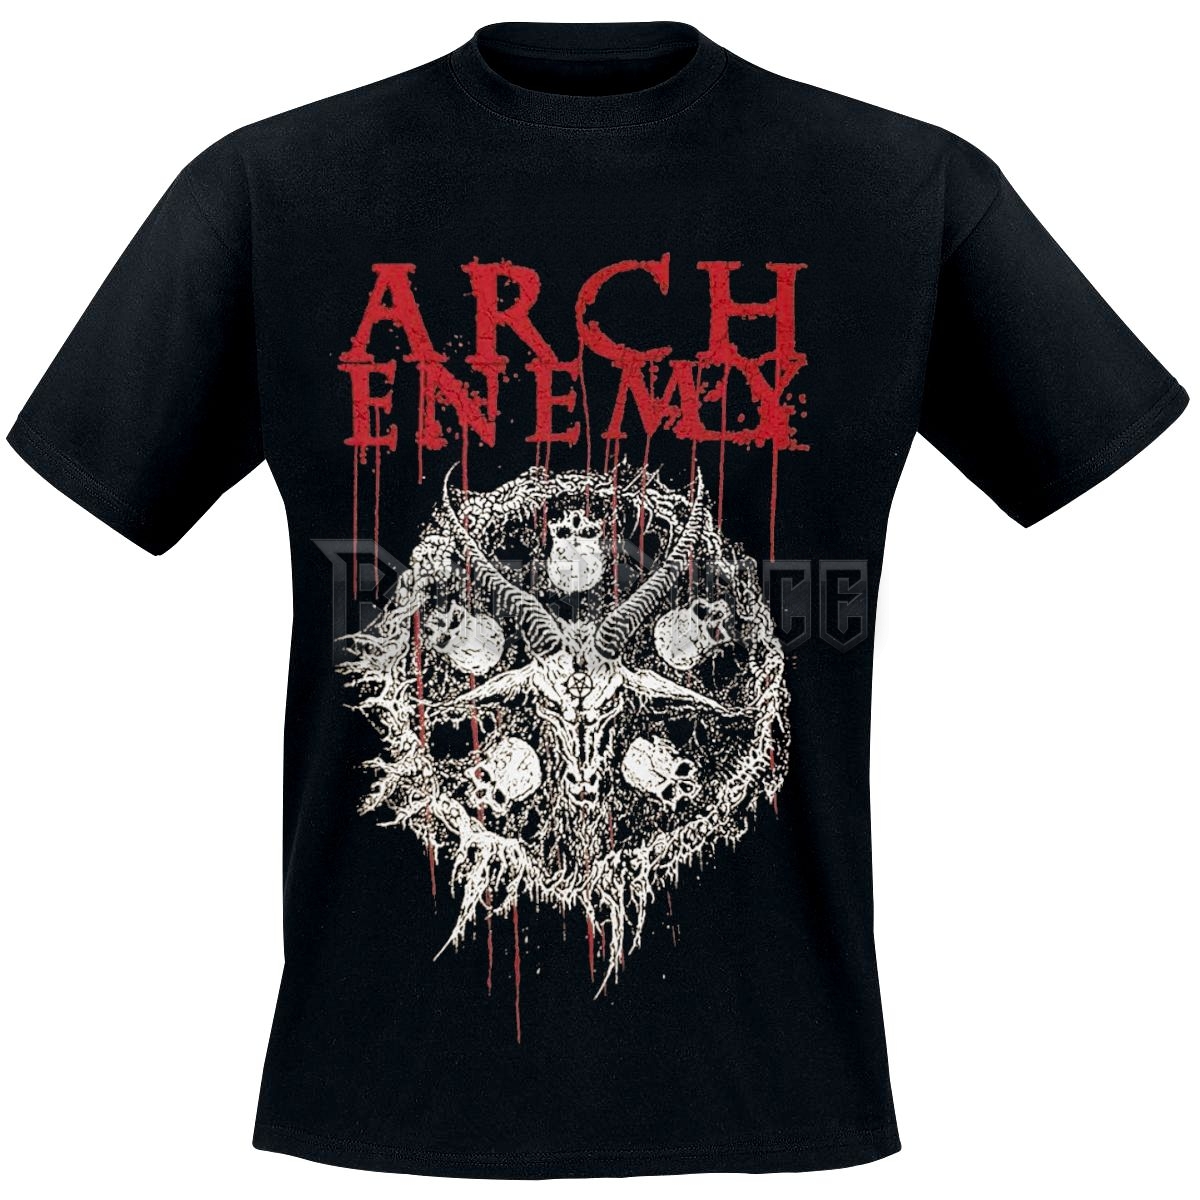 ARCH ENEMY - Pure fucking metal revamped - UNISEX PÓLÓ